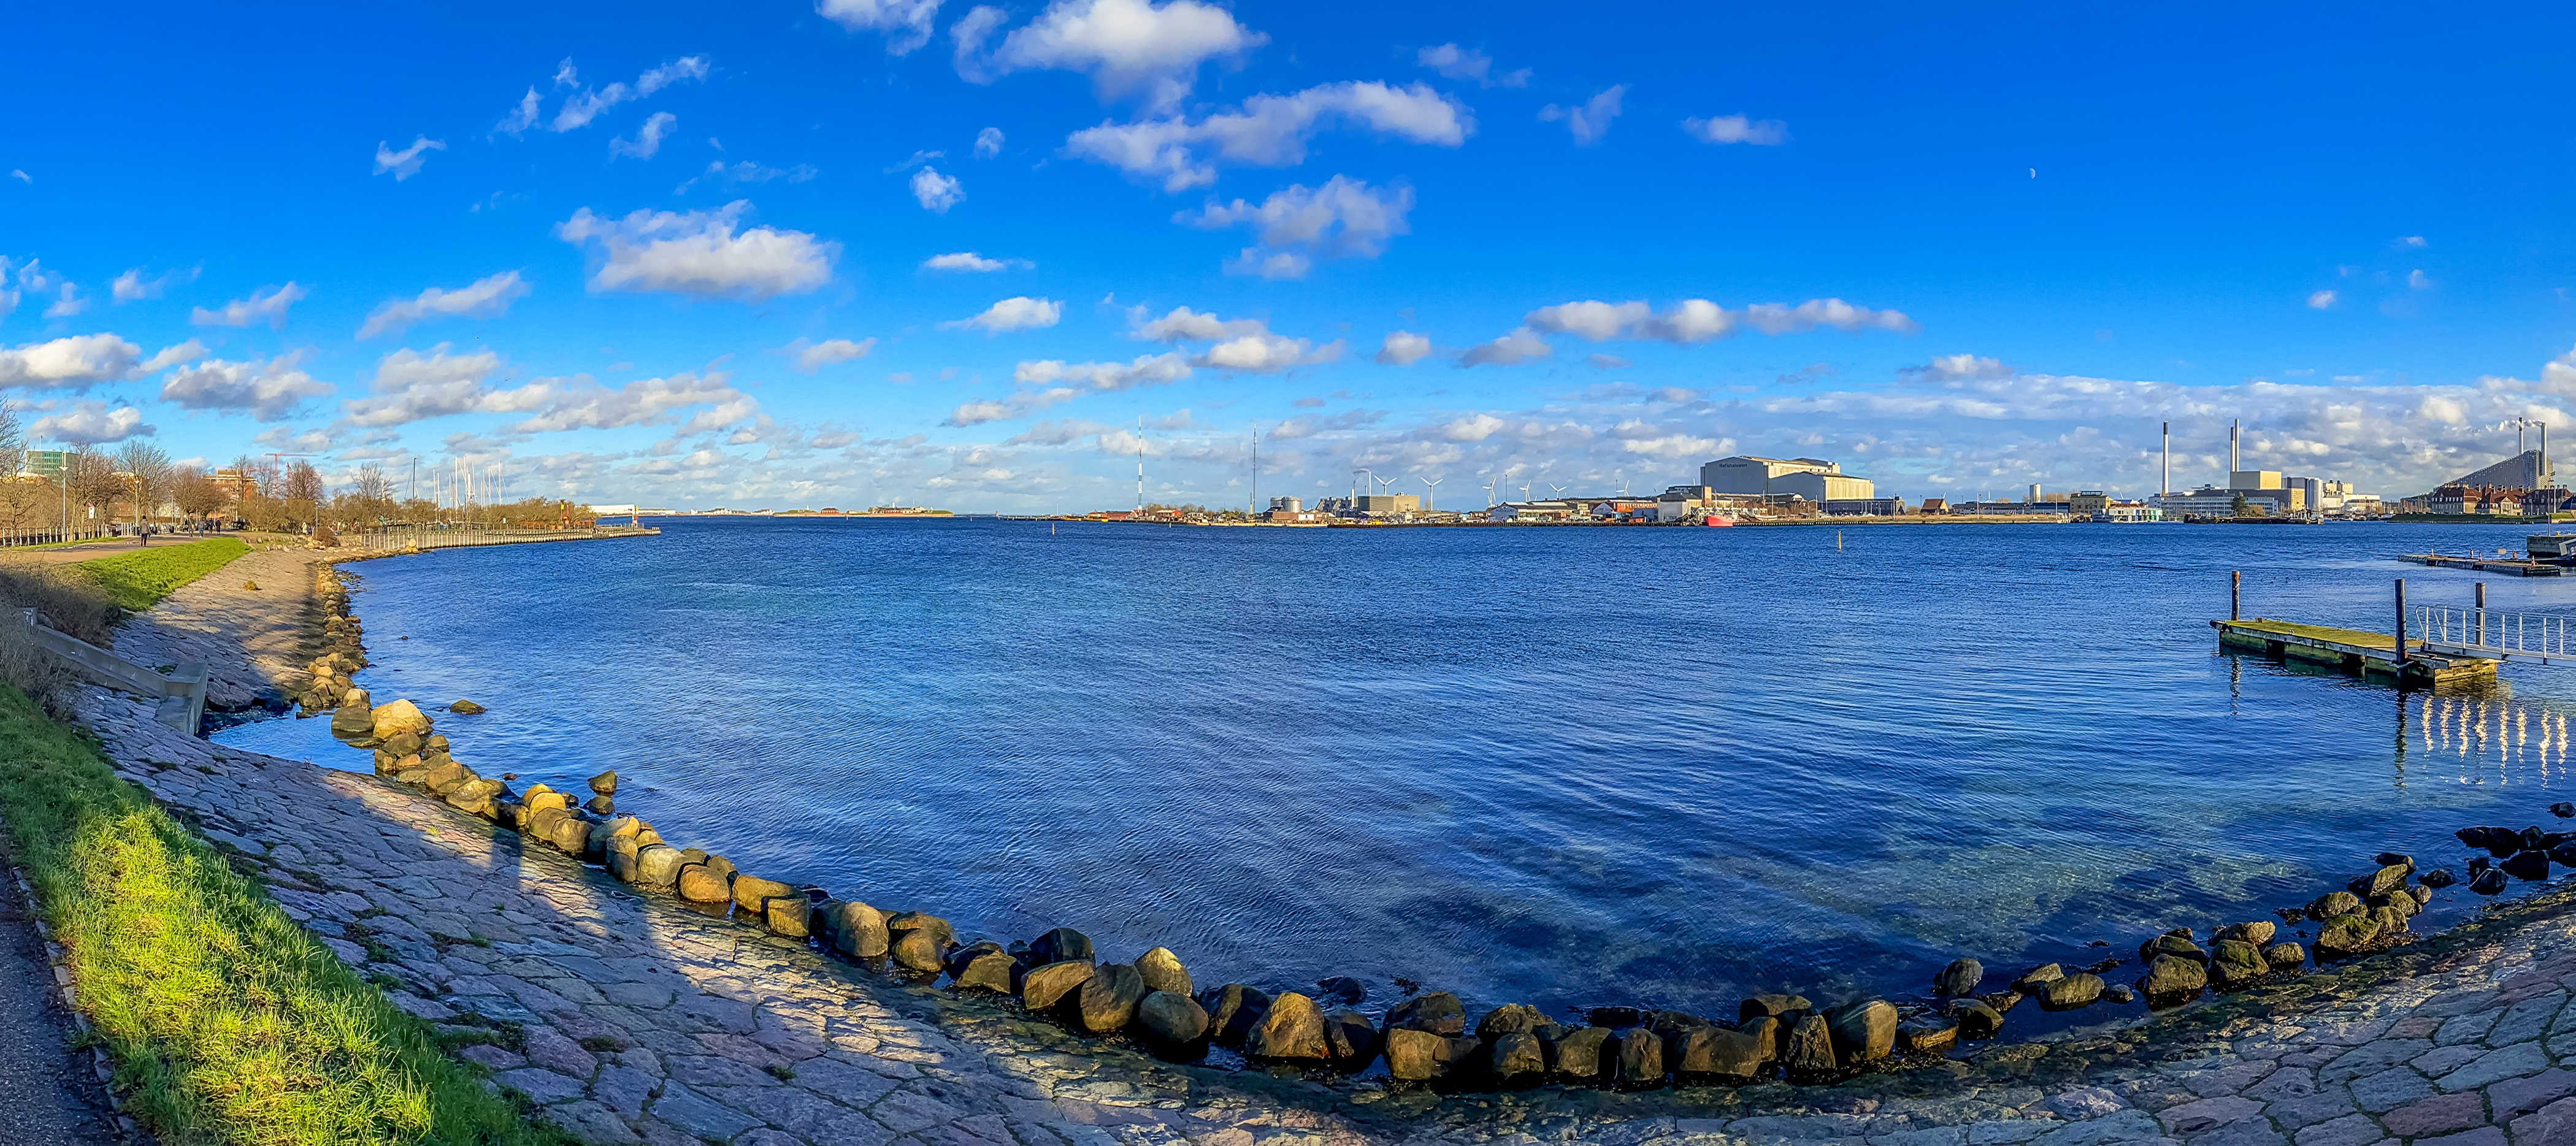 Картинка Копенгаген Дания панорамная Природа Пирсы Камни заливы Панорама Залив Камень залива Причалы Пристань